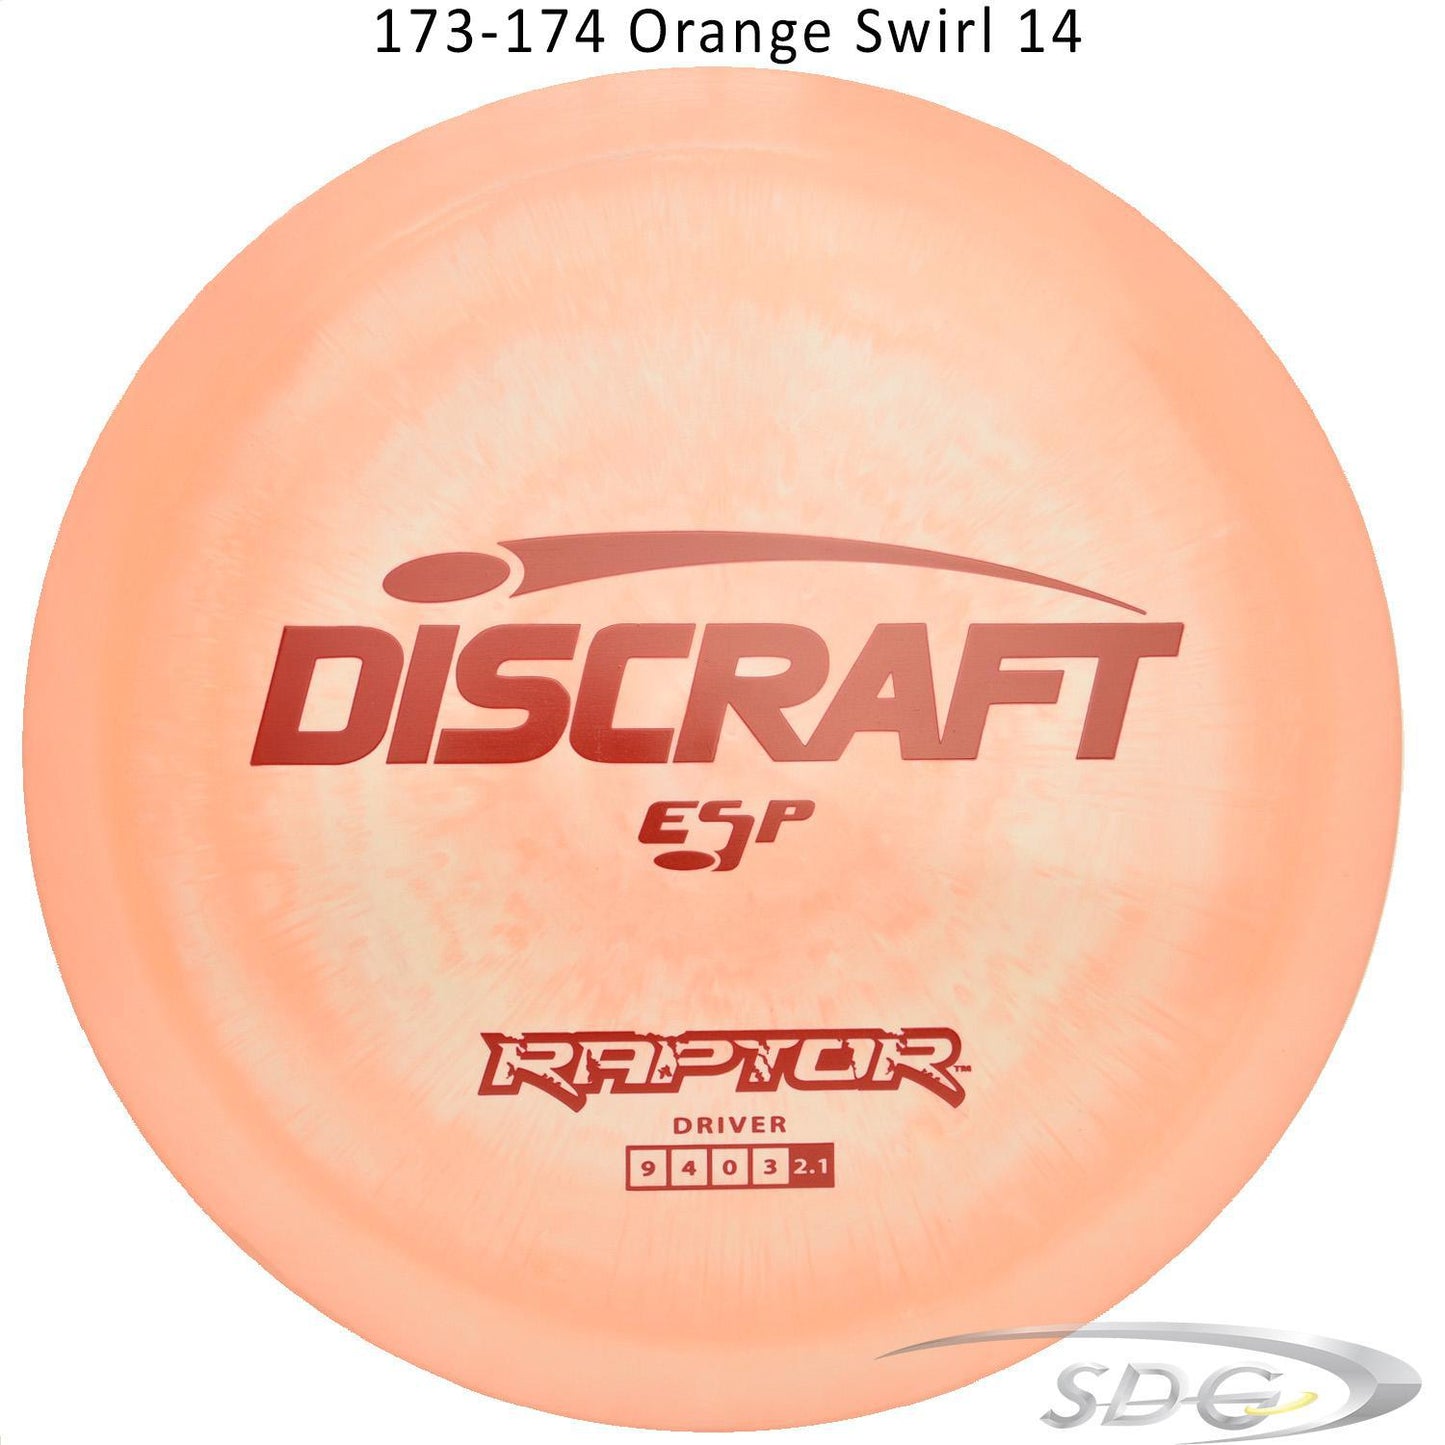 discraft-esp-raptor-disc-golf-distance-driver 173-174 Orange Swirl 14 